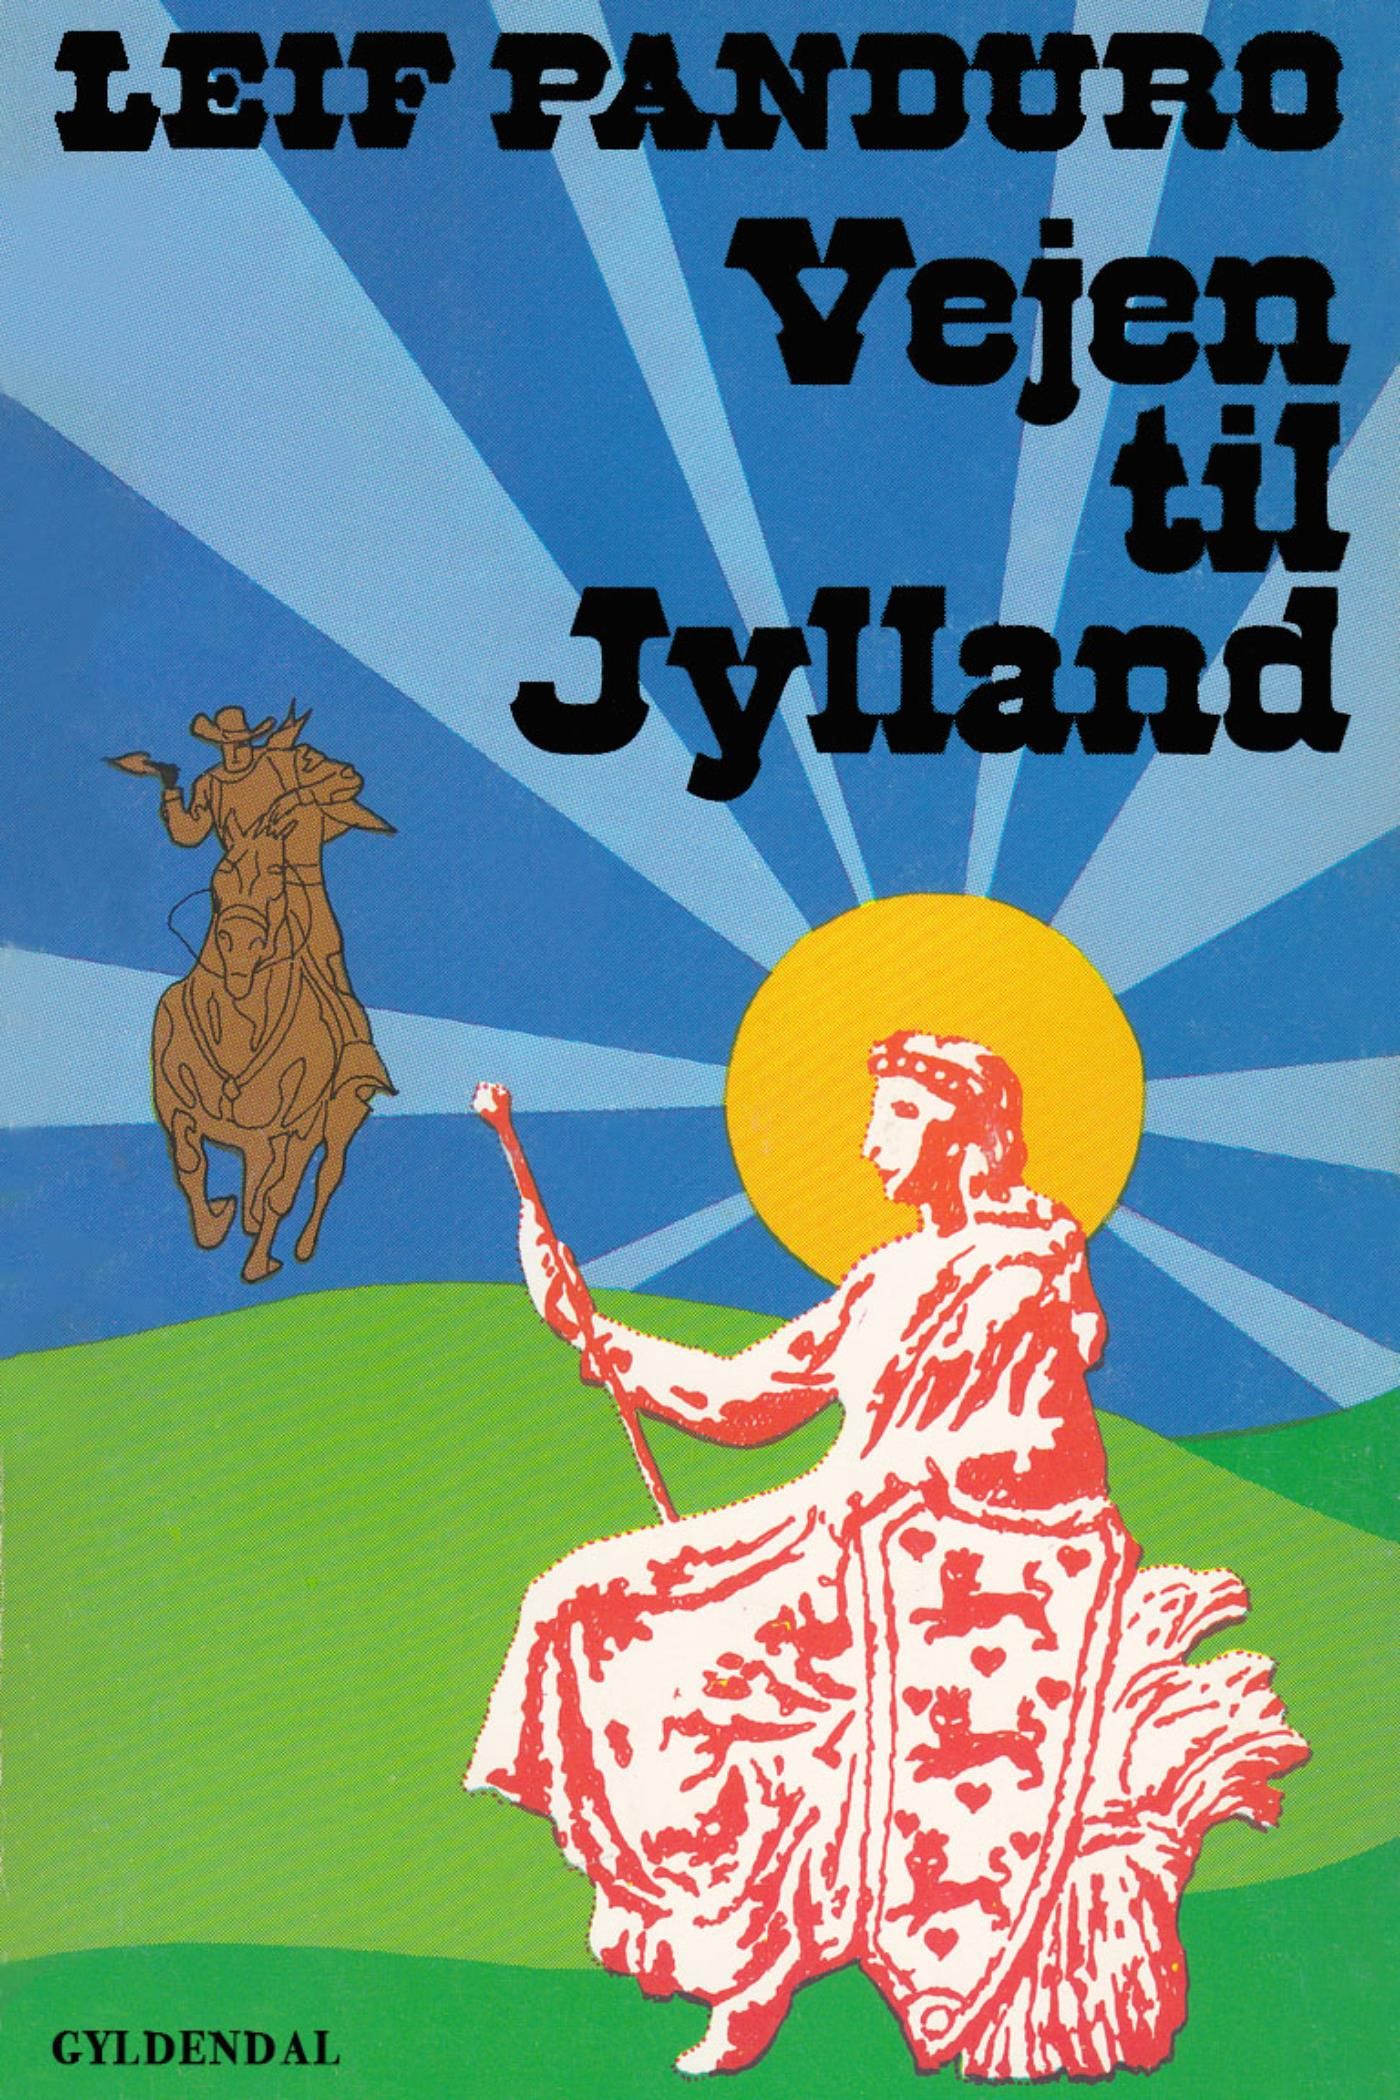 Vejen til Jylland, eBook by Leif Panduro